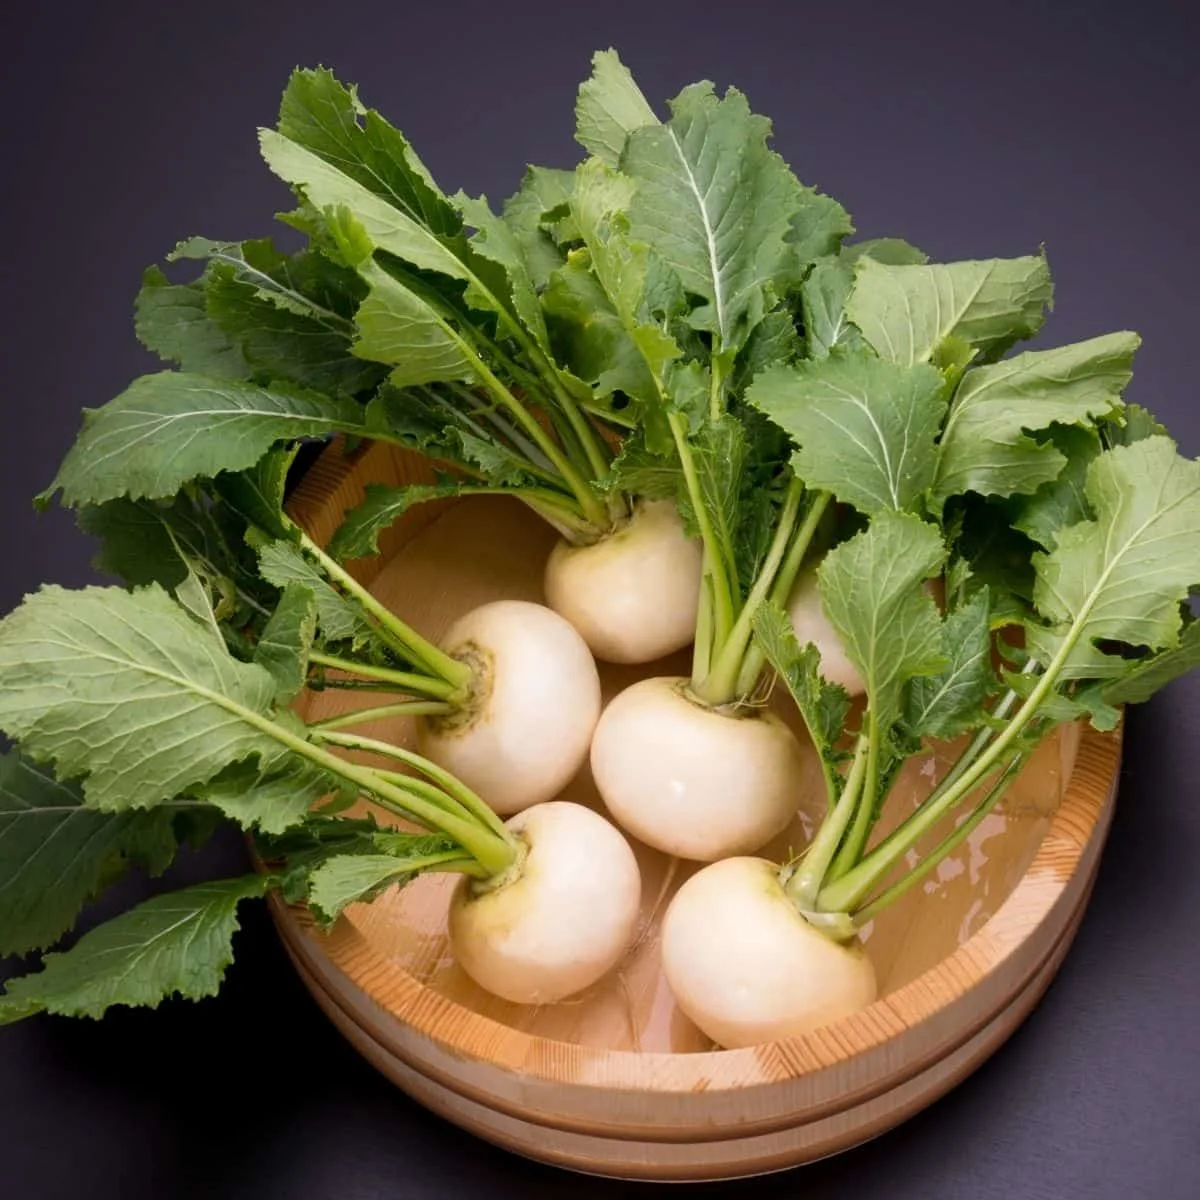 Turnips Benefits